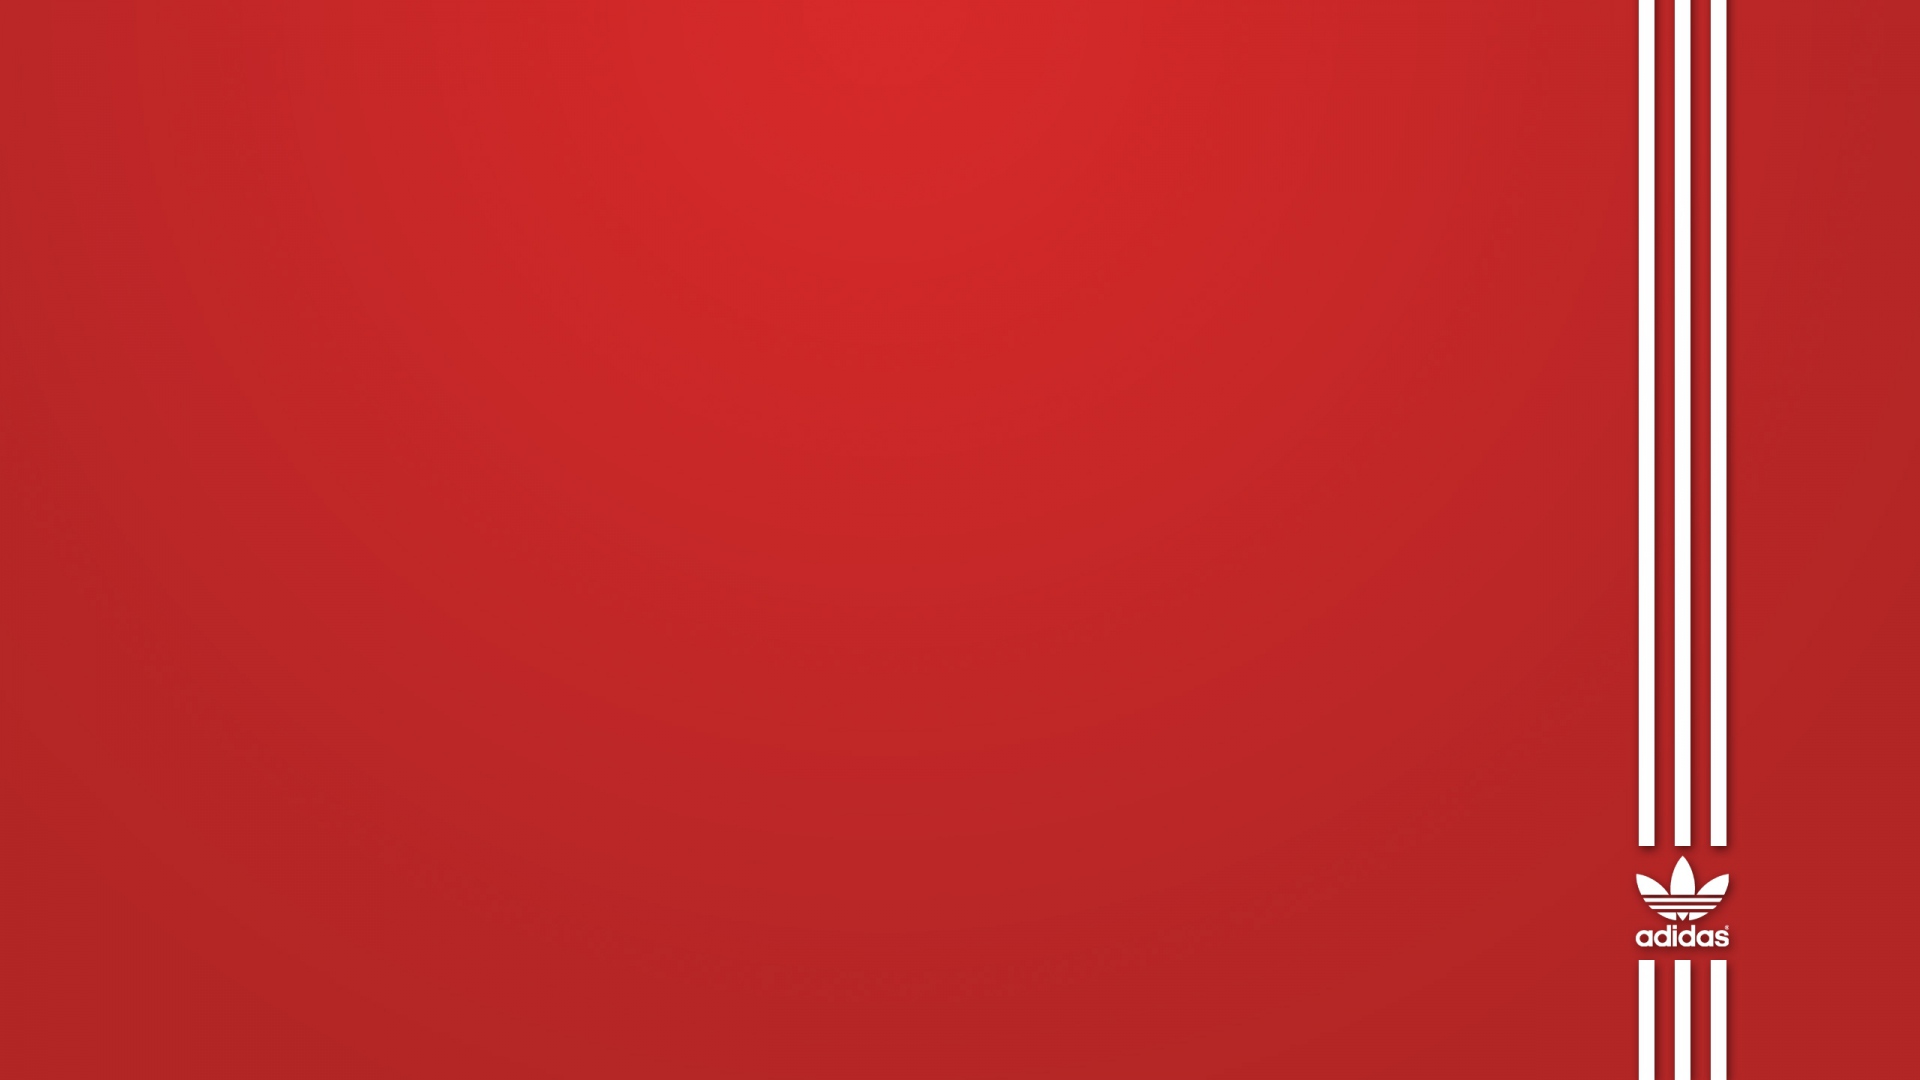 Full HD Wallpaper adidas logo red background, Desktop Backgrounds